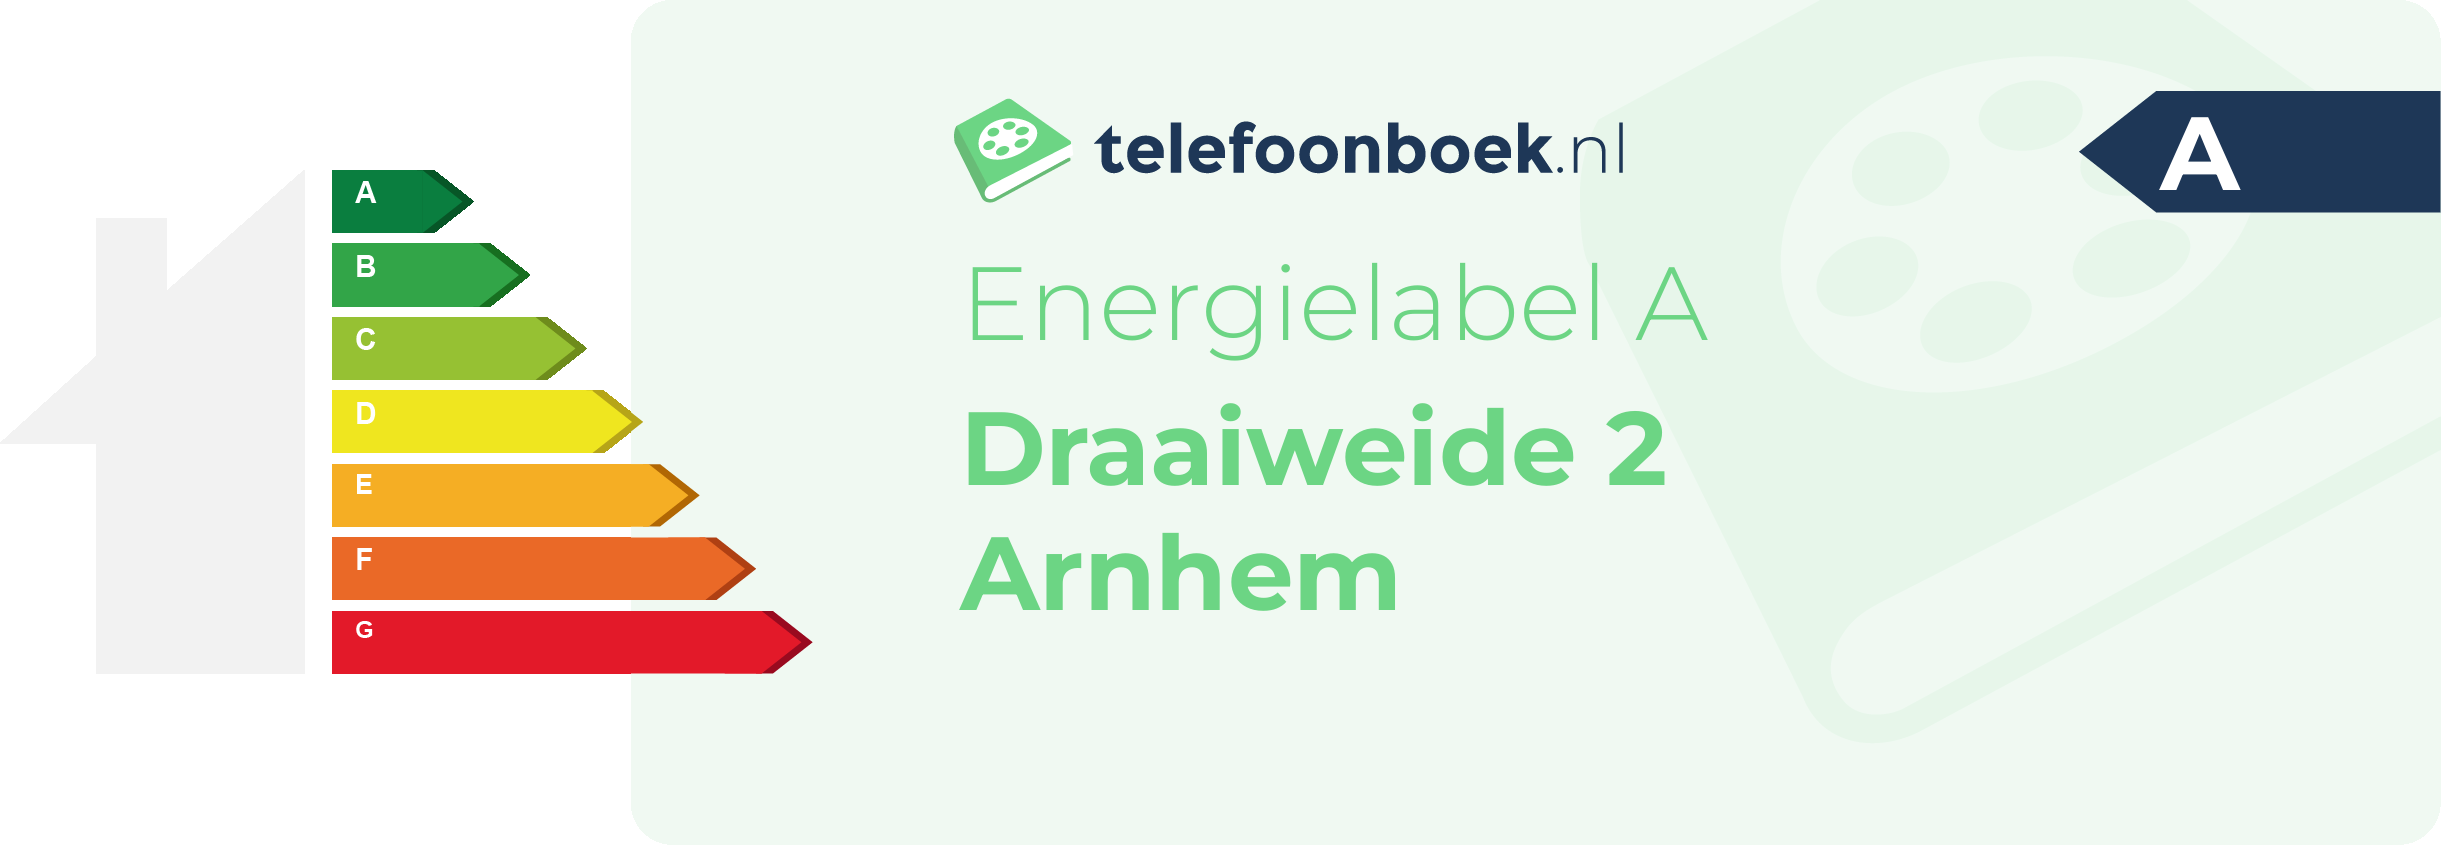 Energielabel Draaiweide 2 Arnhem